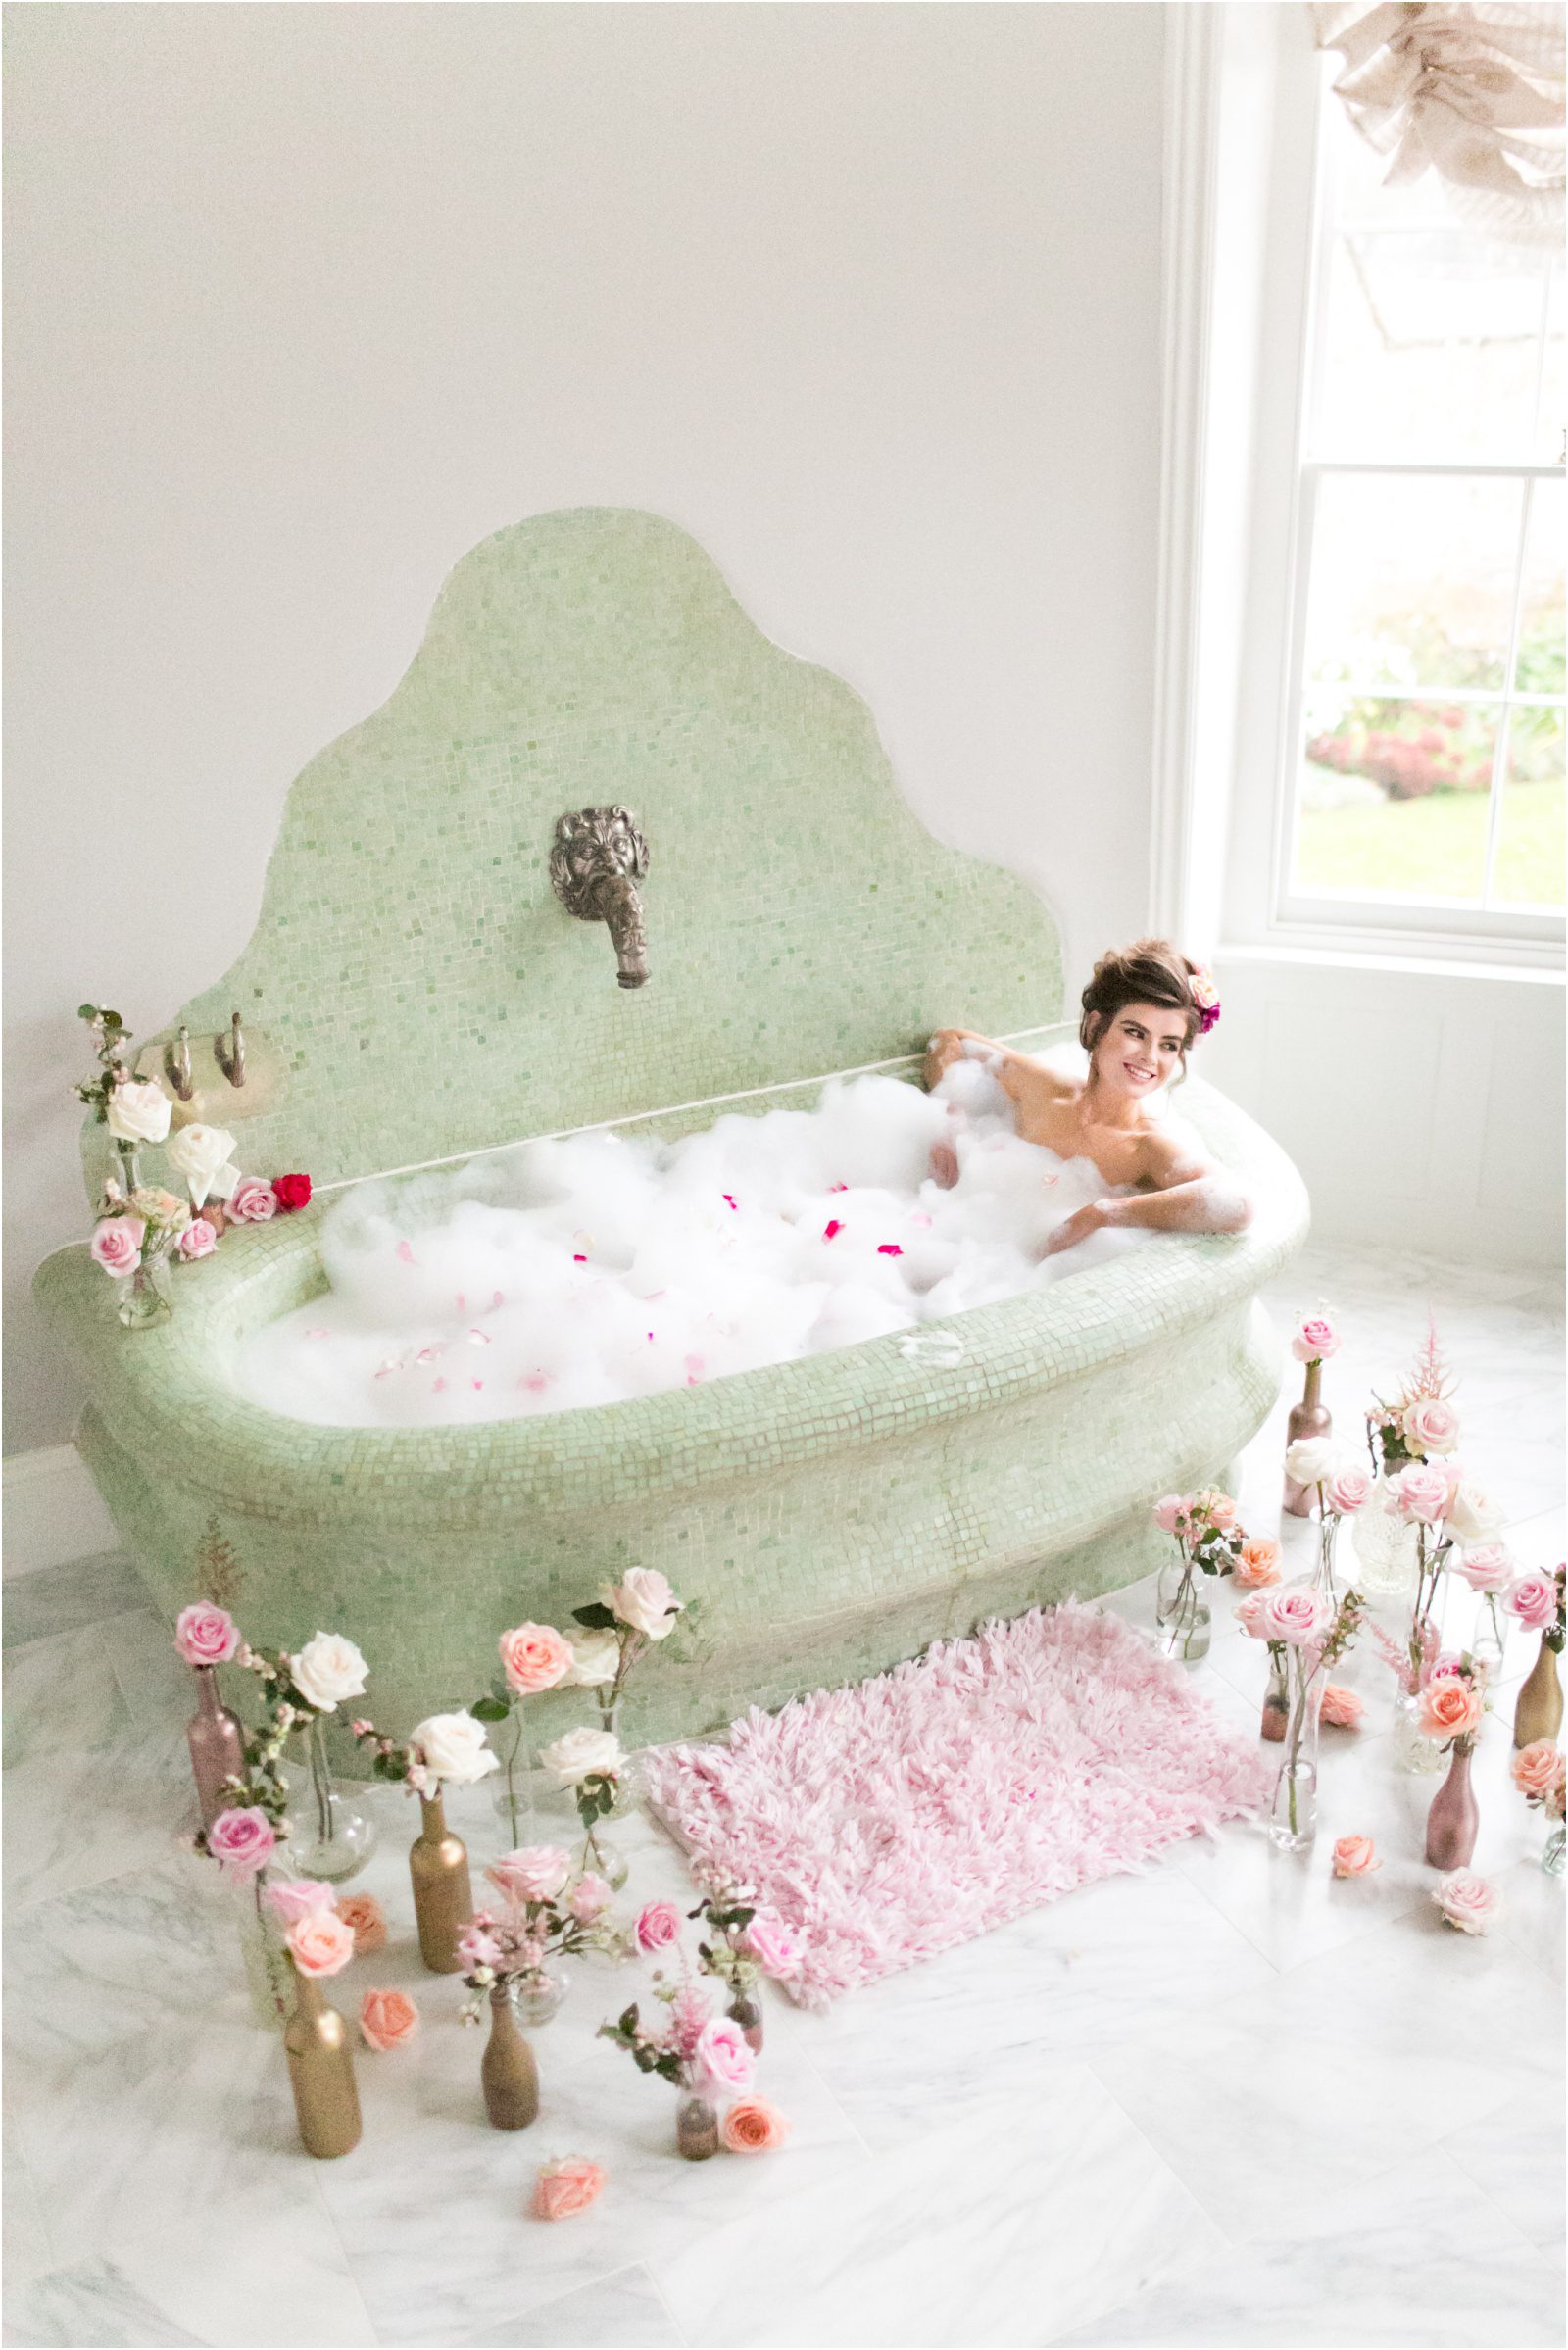 Bride in a mint green mosaic bath tub